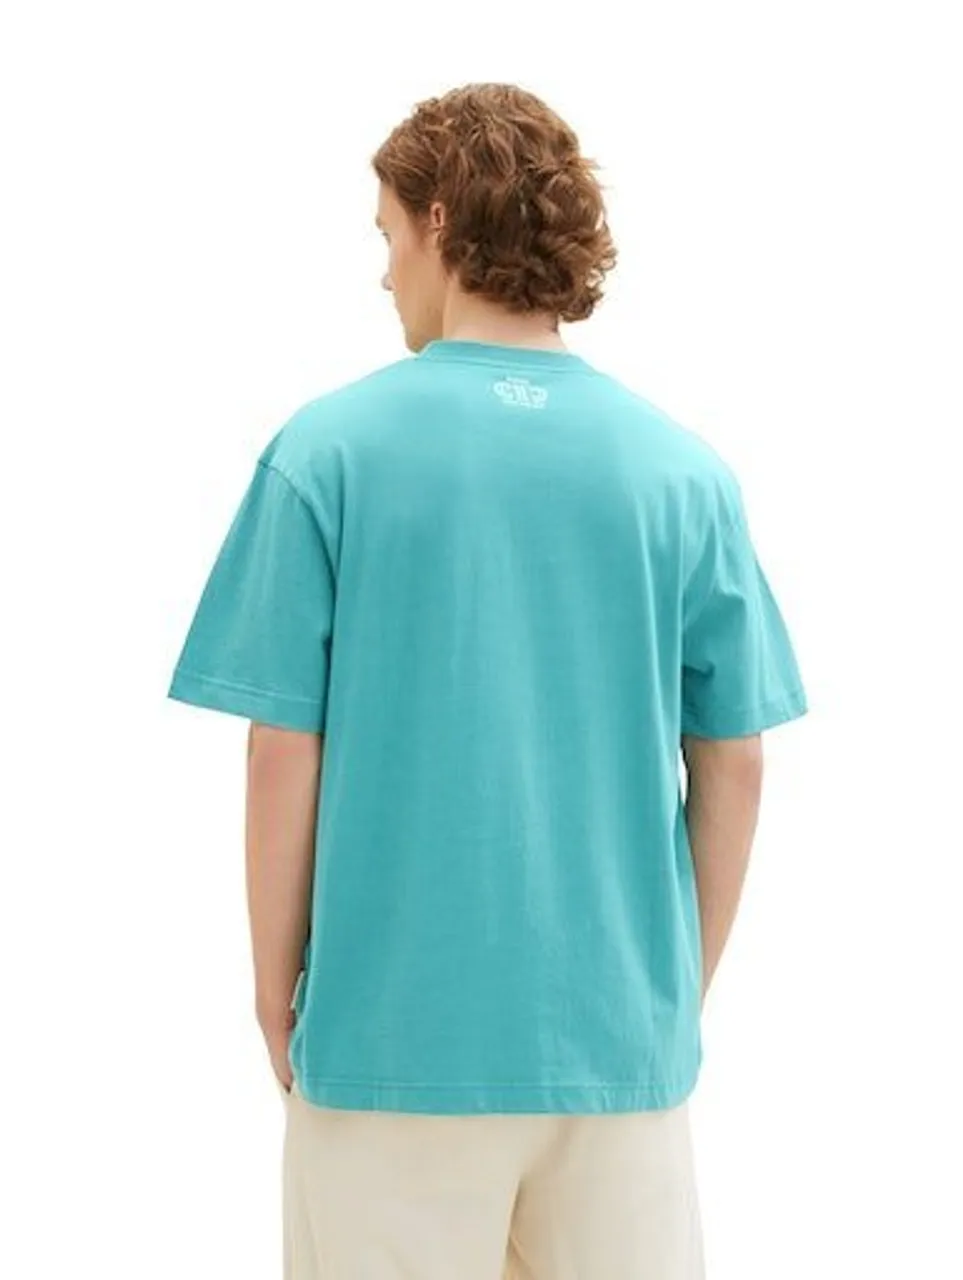 TOM TAILOR Denim T-Shirt mit abgerundetem V-Ausschnitt